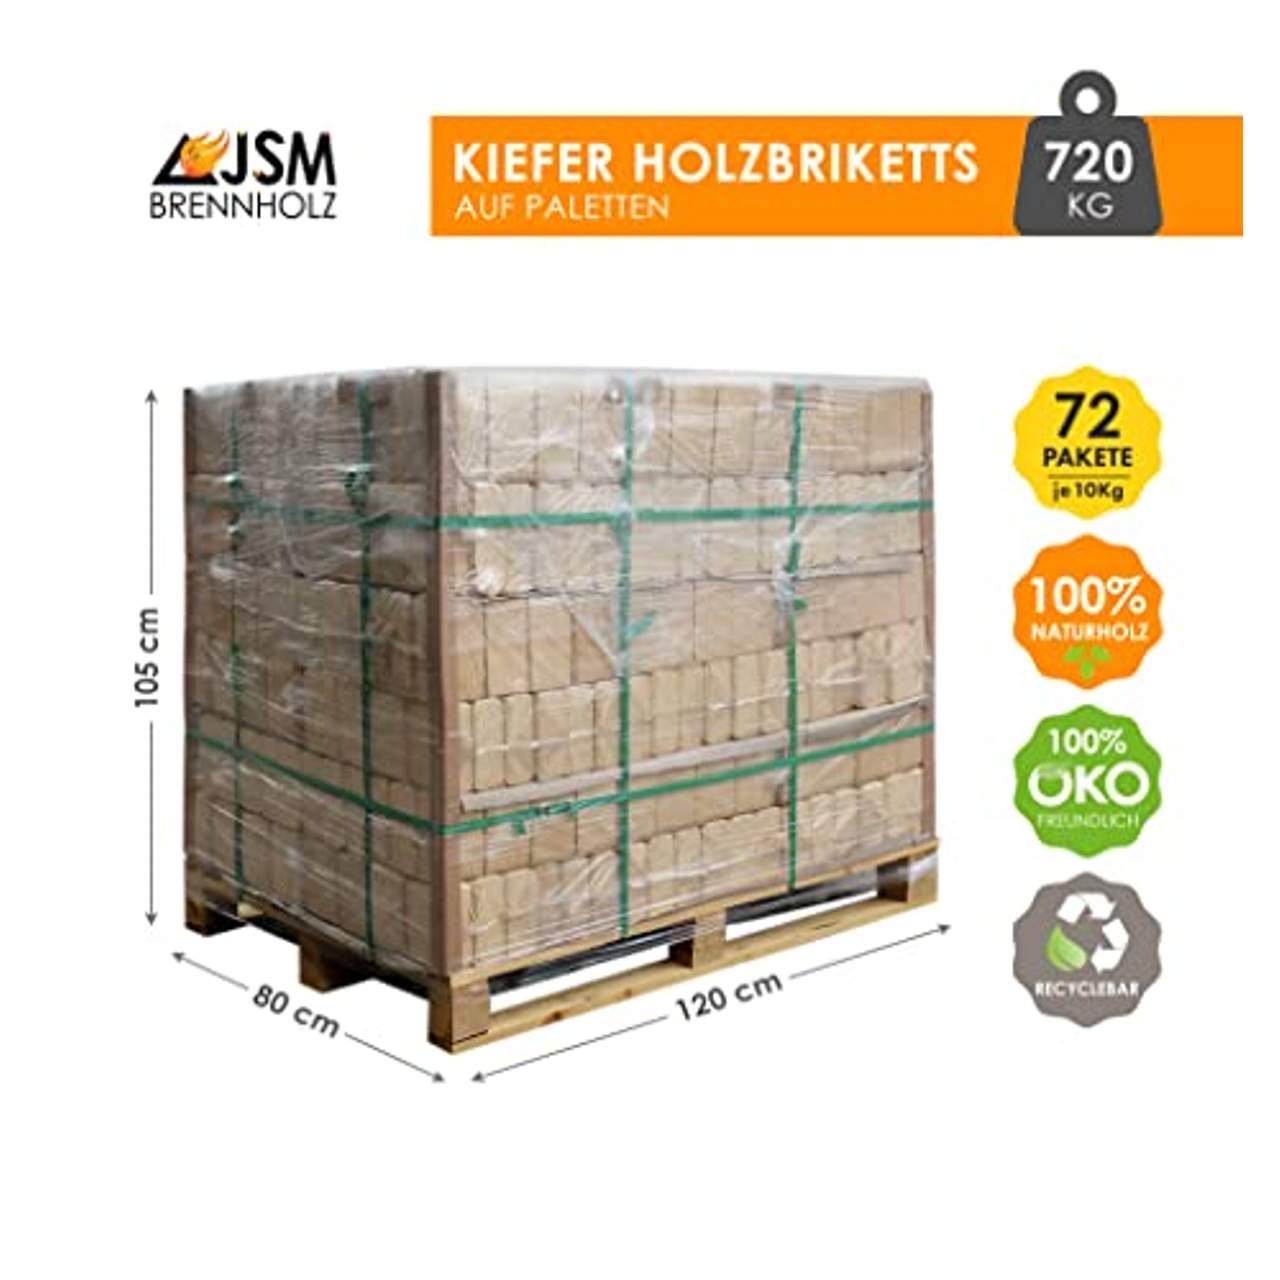 JSM-Brennholz Holzbriketts aus Kiefernholz